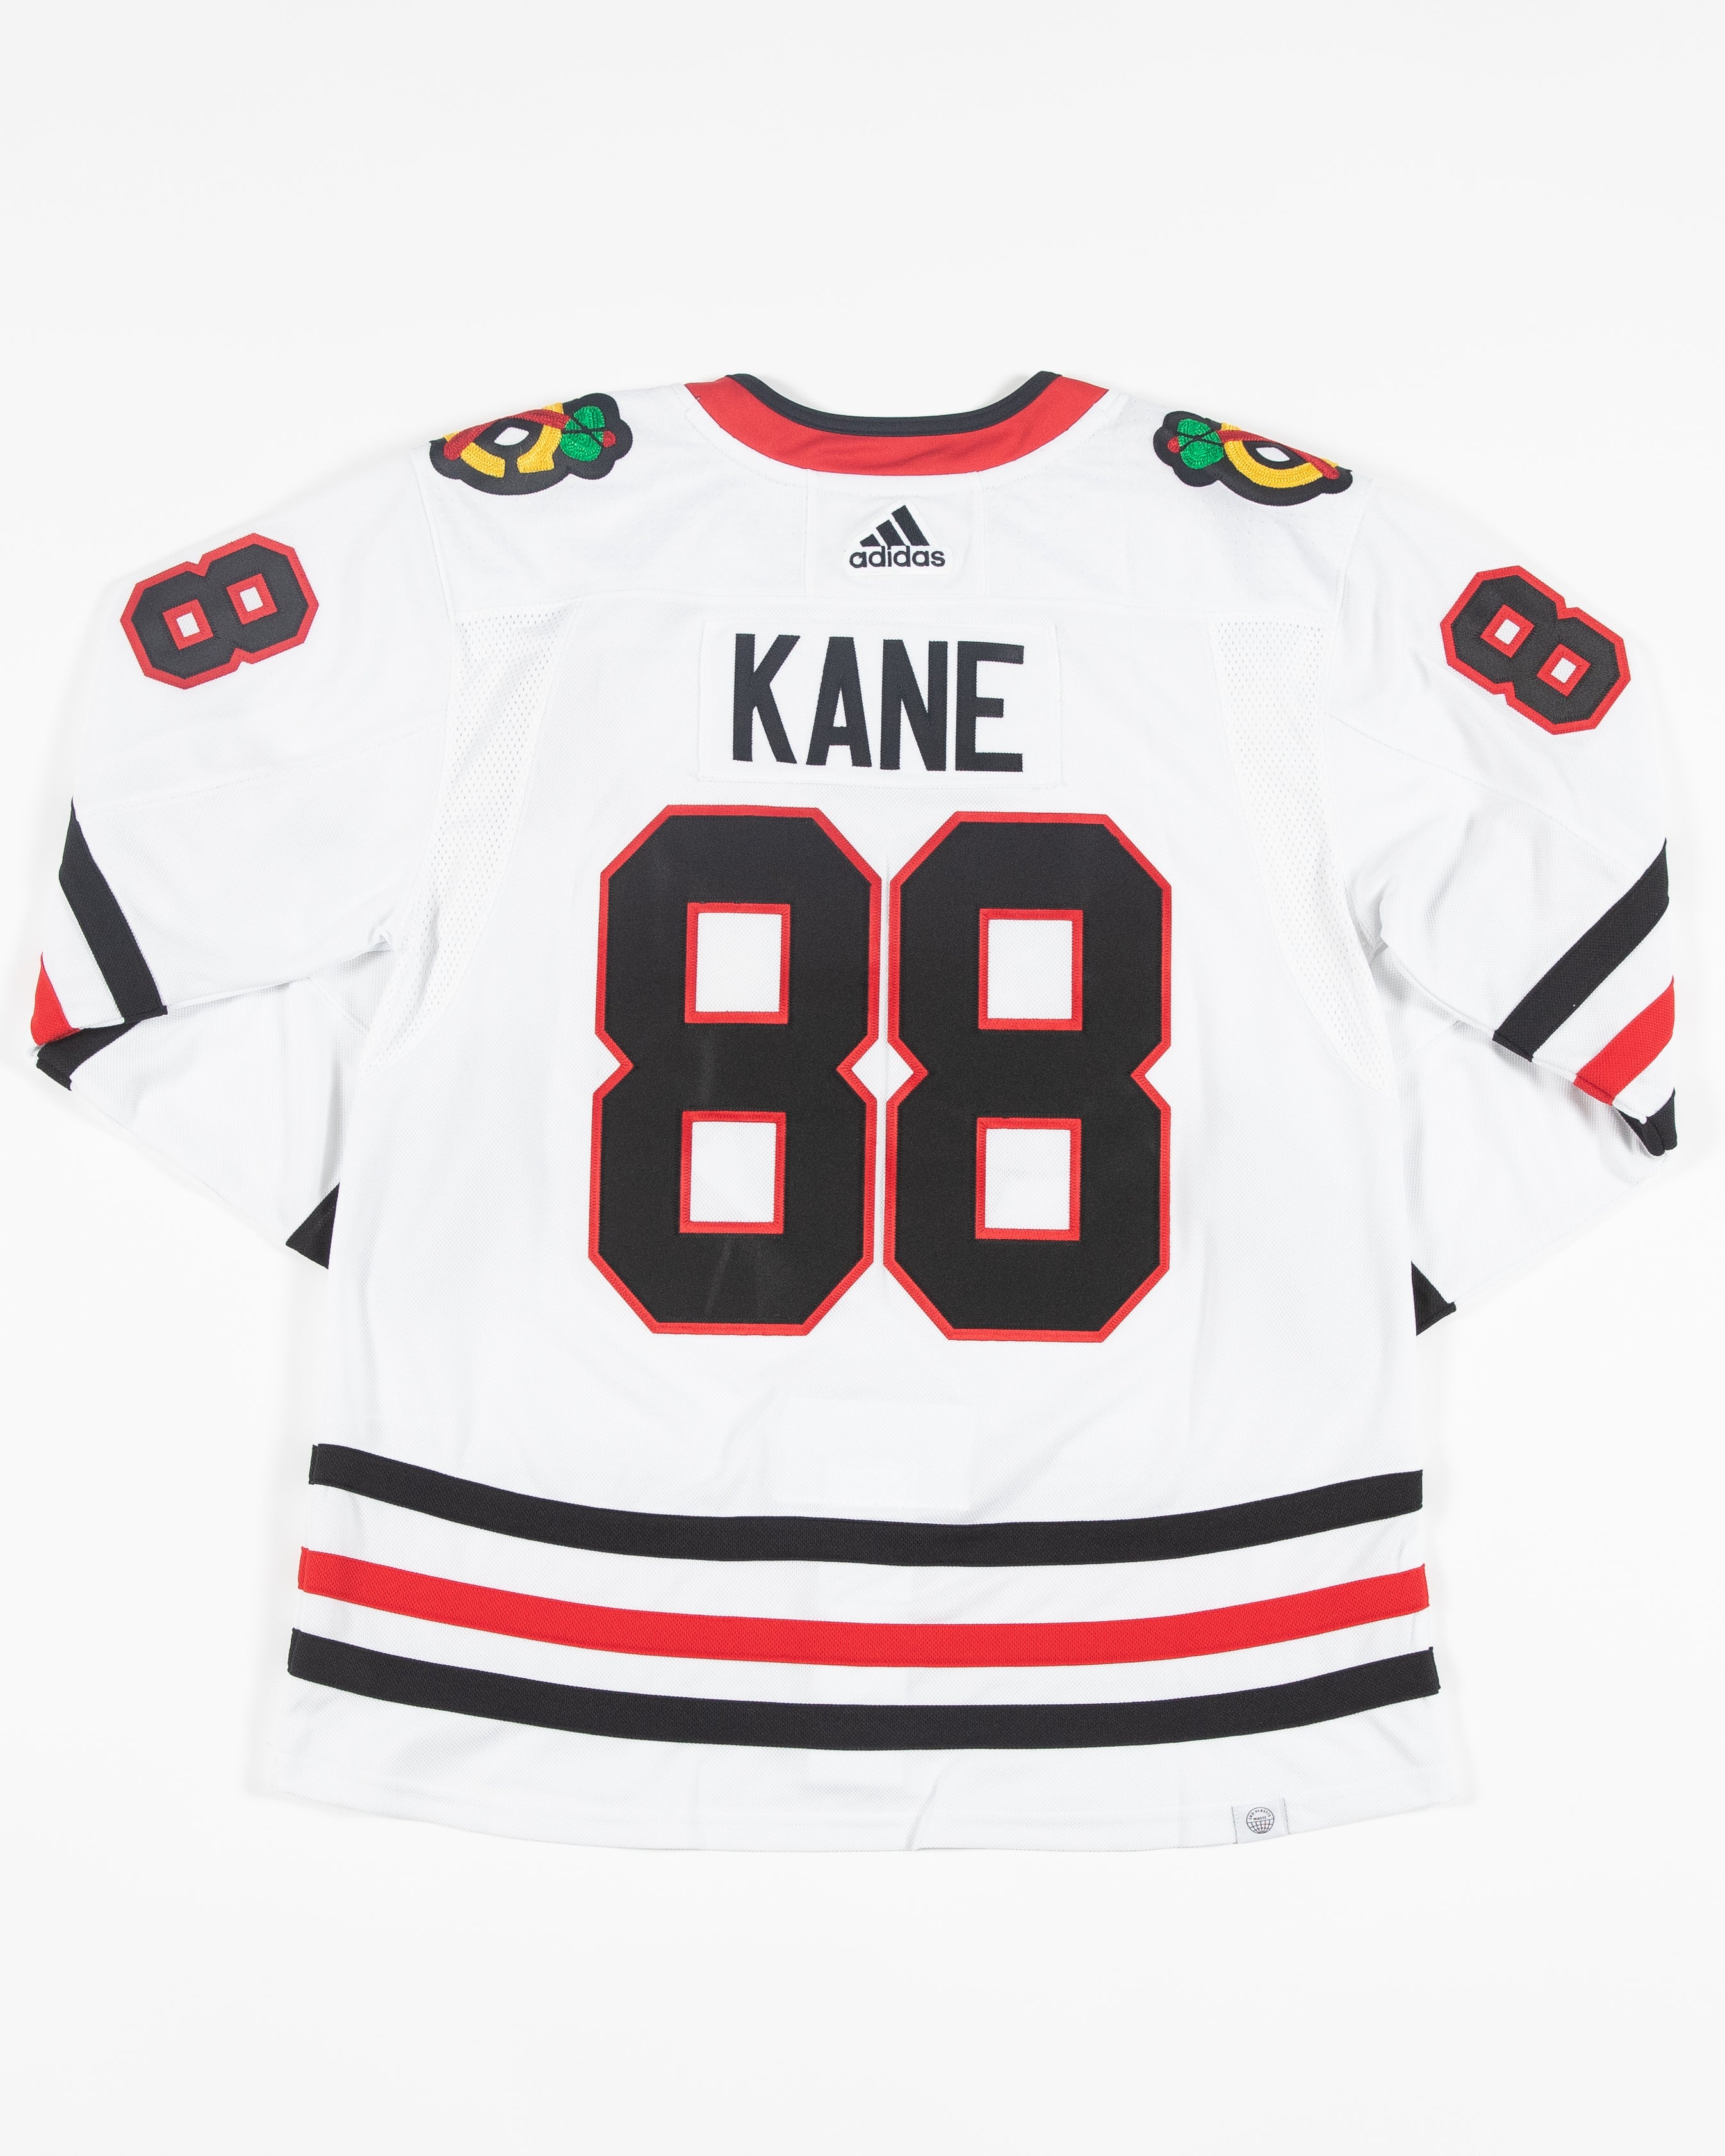 Reebok Authentic Kane Rookie Year Chicago Blackhawks NHL Hockey Jersey Red  46